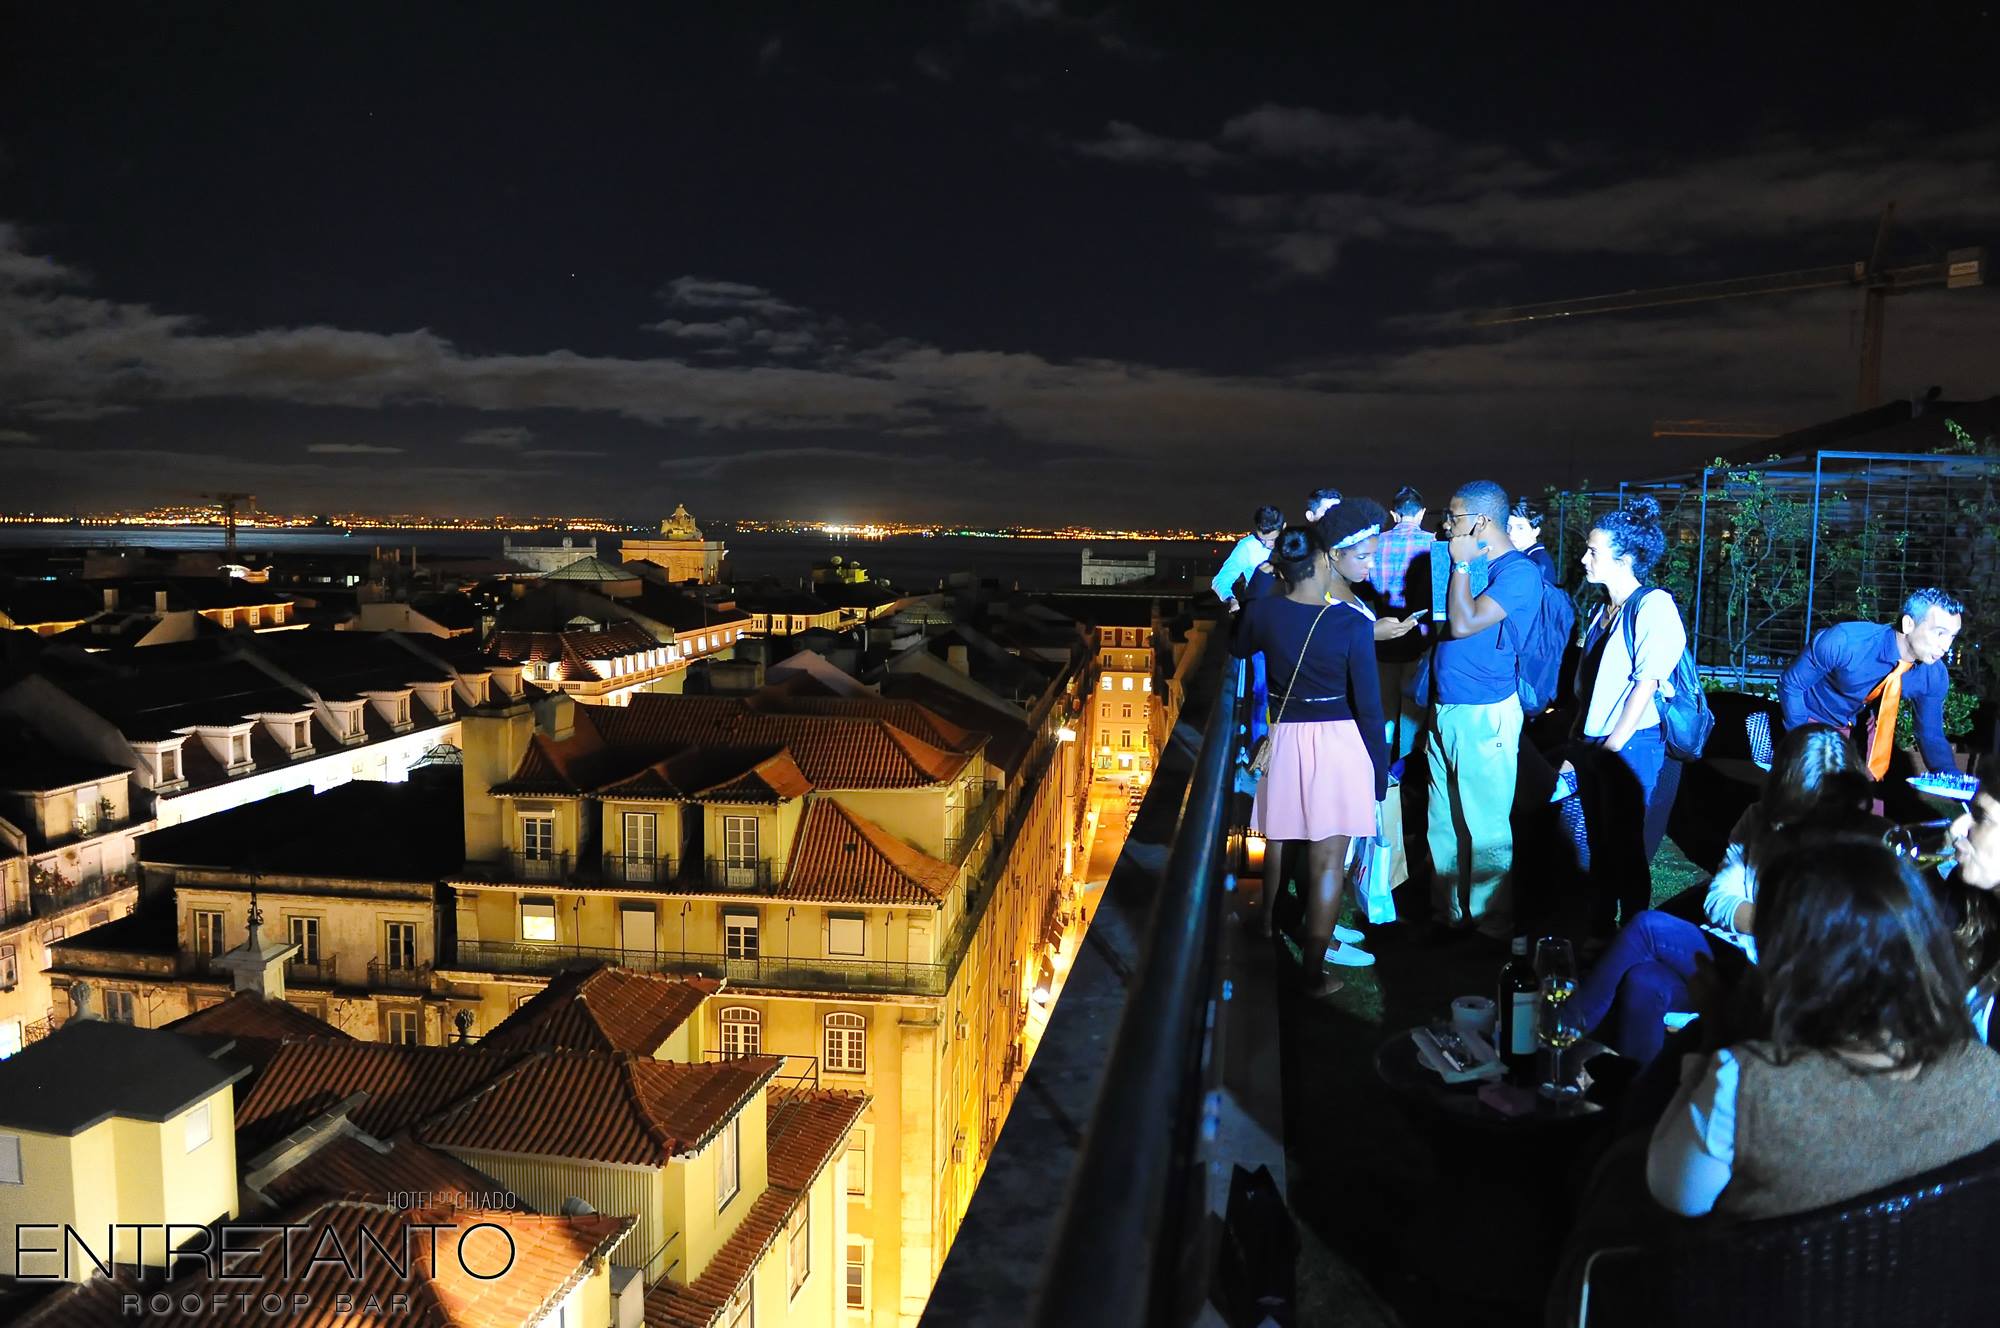 Entretanto - Terrasse Rooftop Hotel do Chiado - Lisbonne